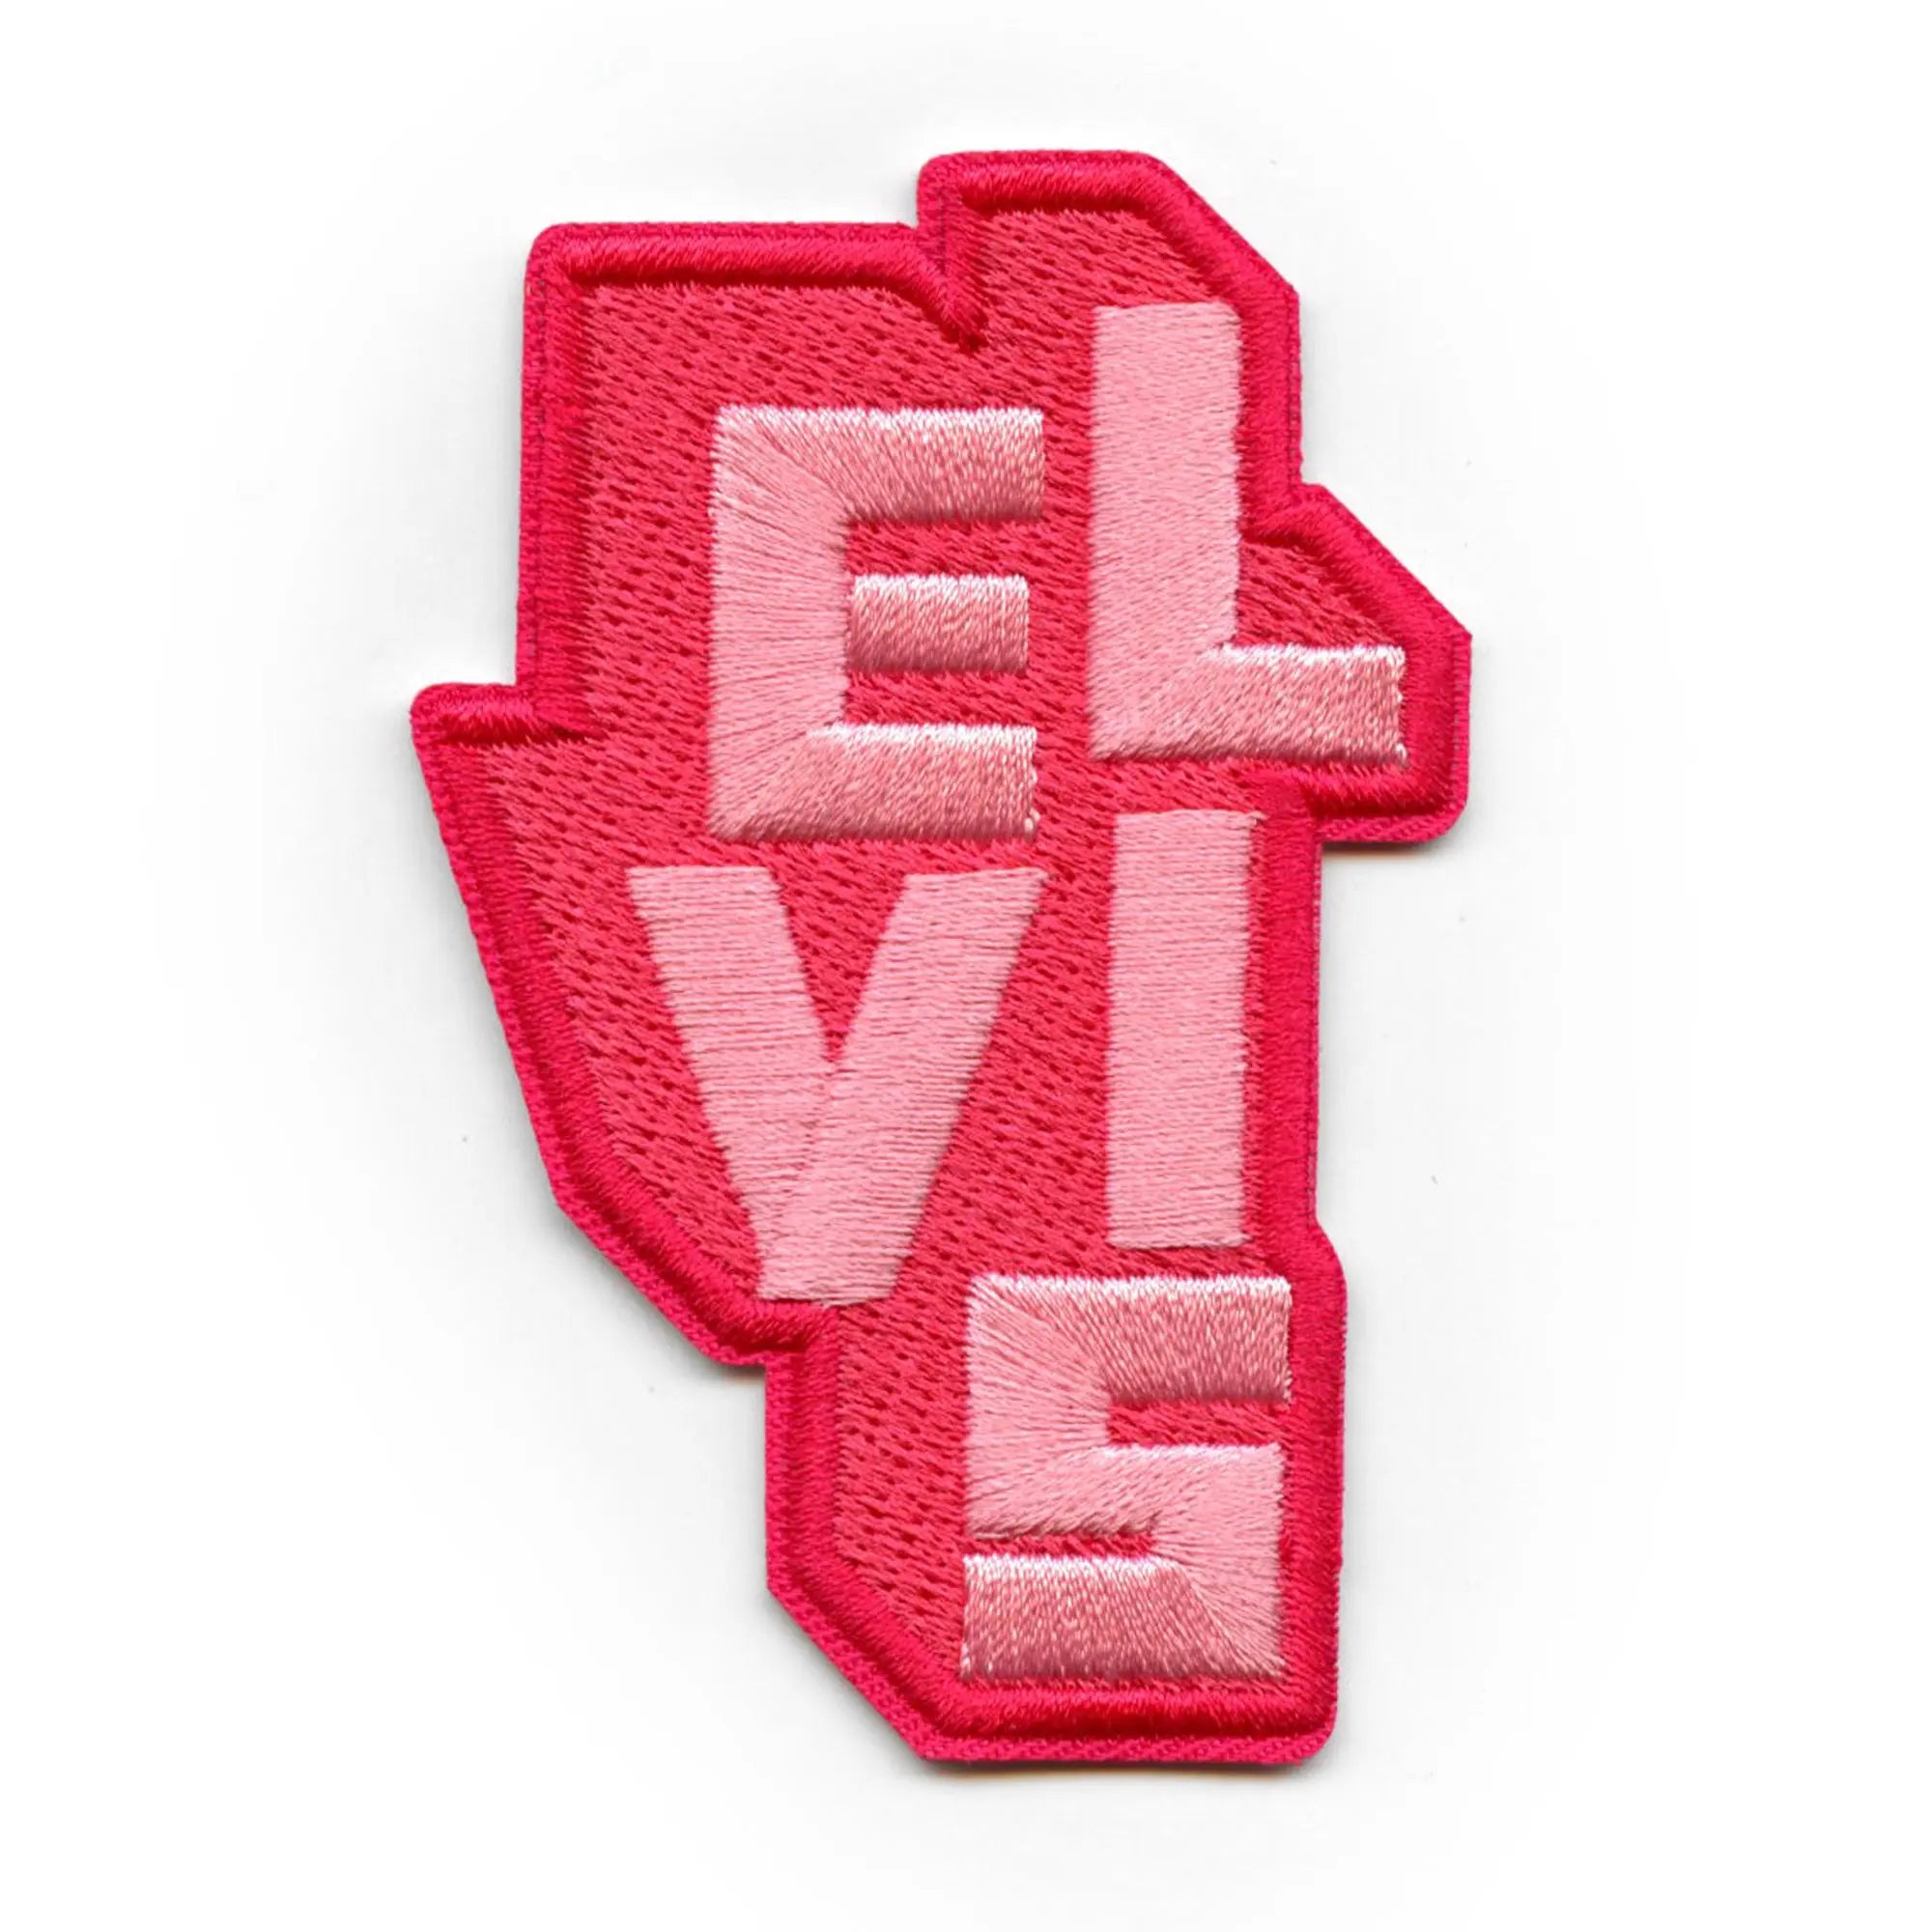 Disney Lilo & Stitch 'Elvis' Stitch Iron On Patch Embroidered New 3